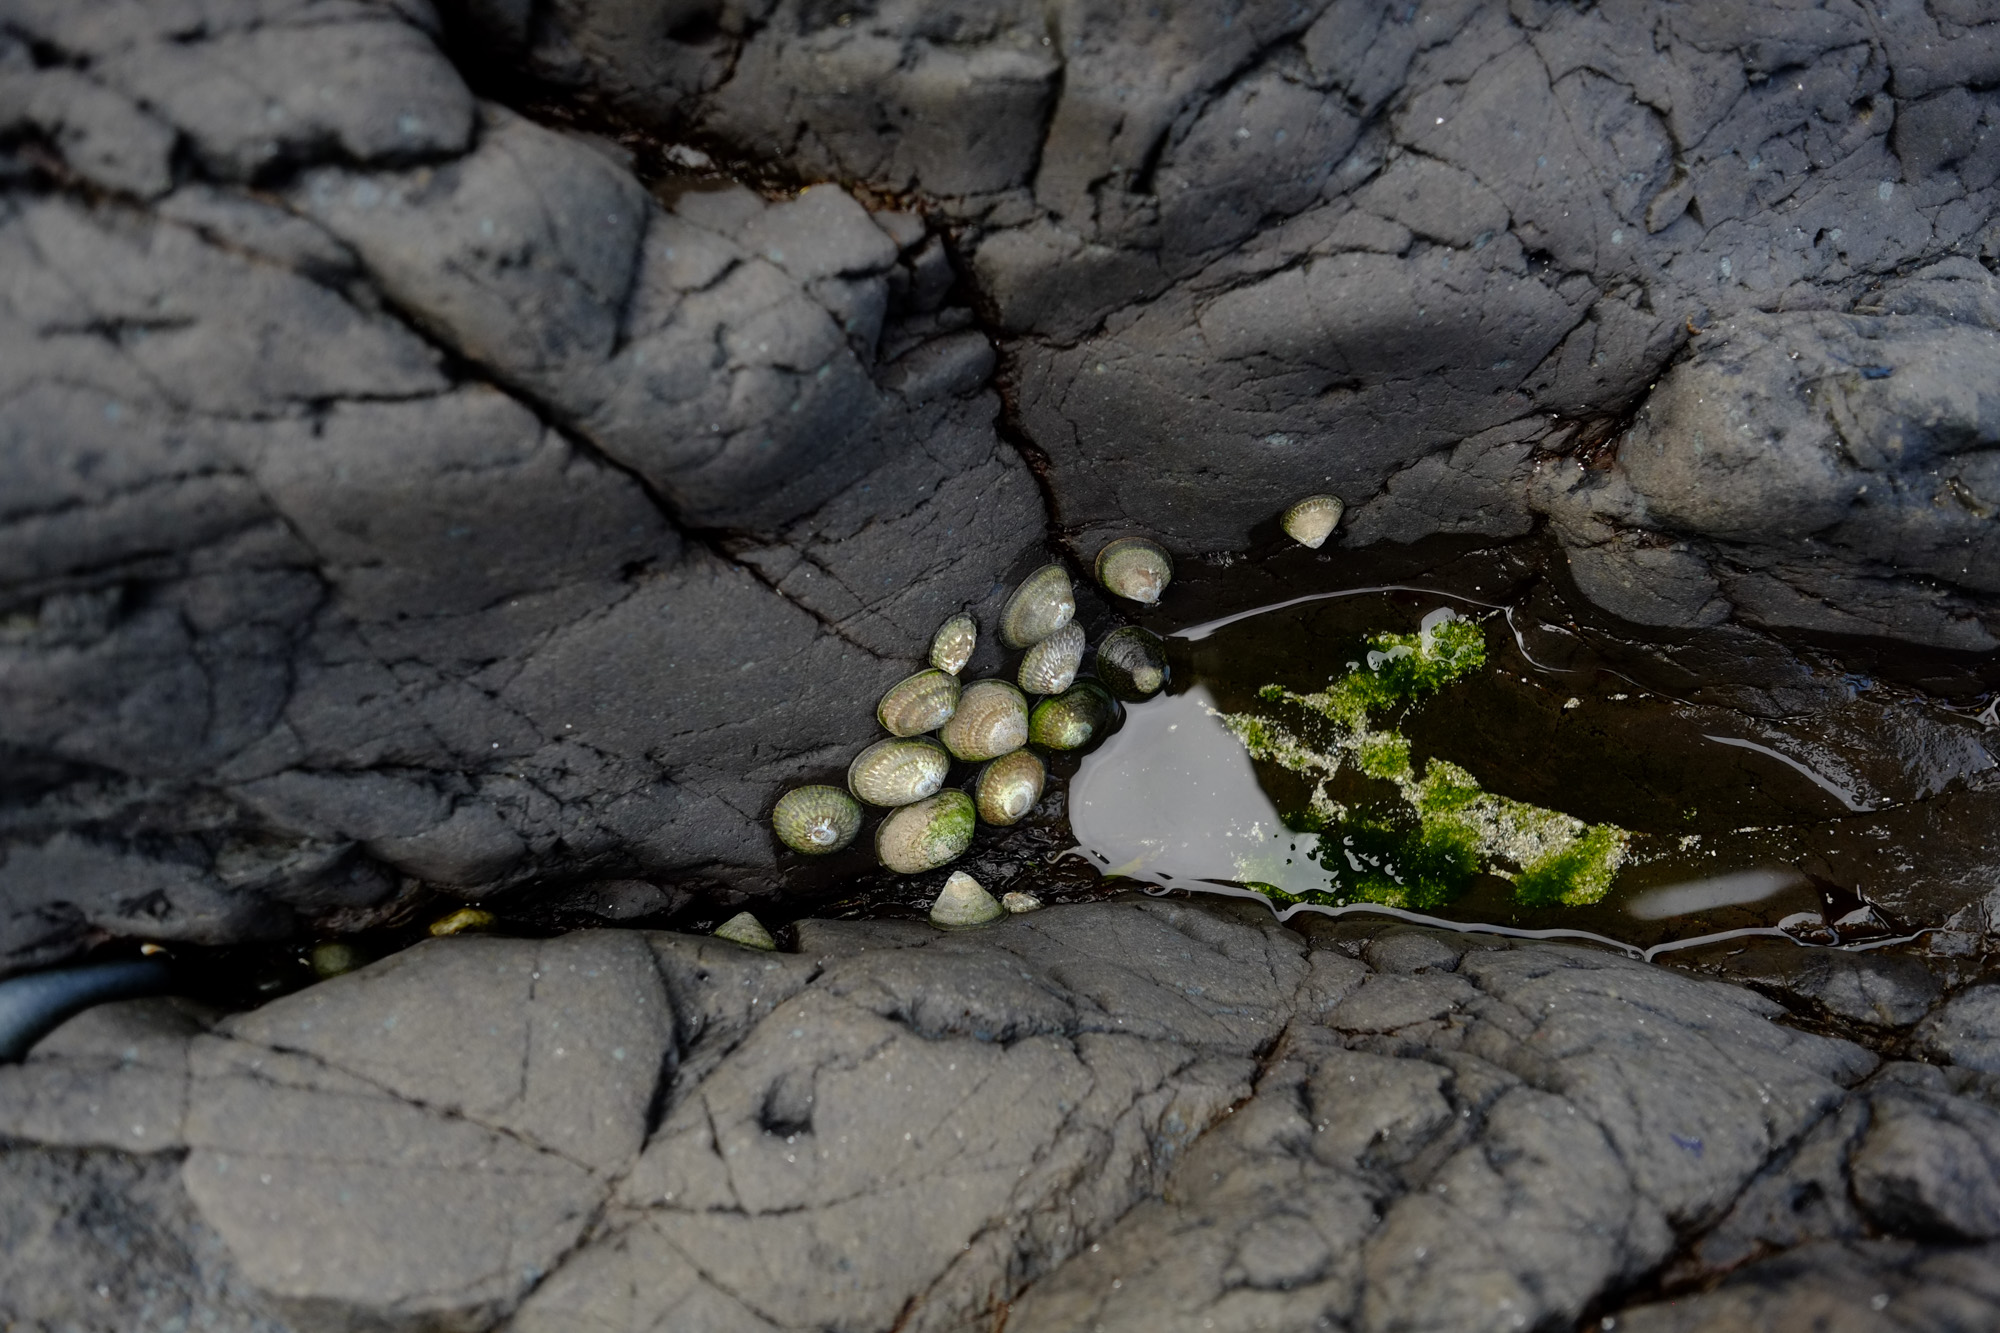 Limpids fill a tide pool amongst the rocks.